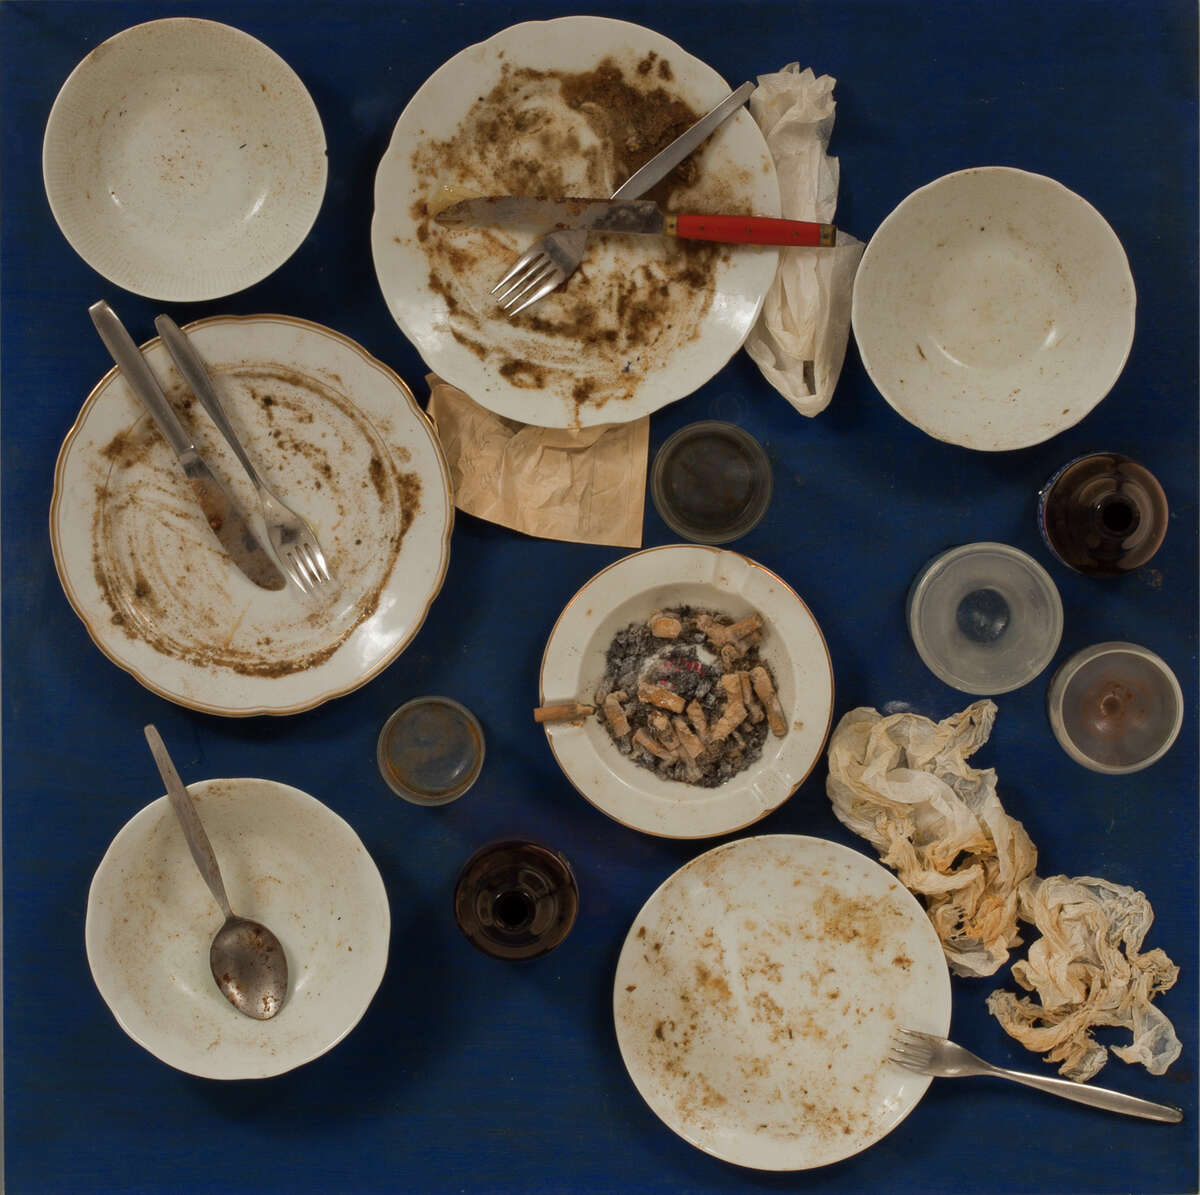 Daniel Spoerri's "Tableau piège, 17. Juni 1972" preserves remnants from a 1972 meal staged by the artist.